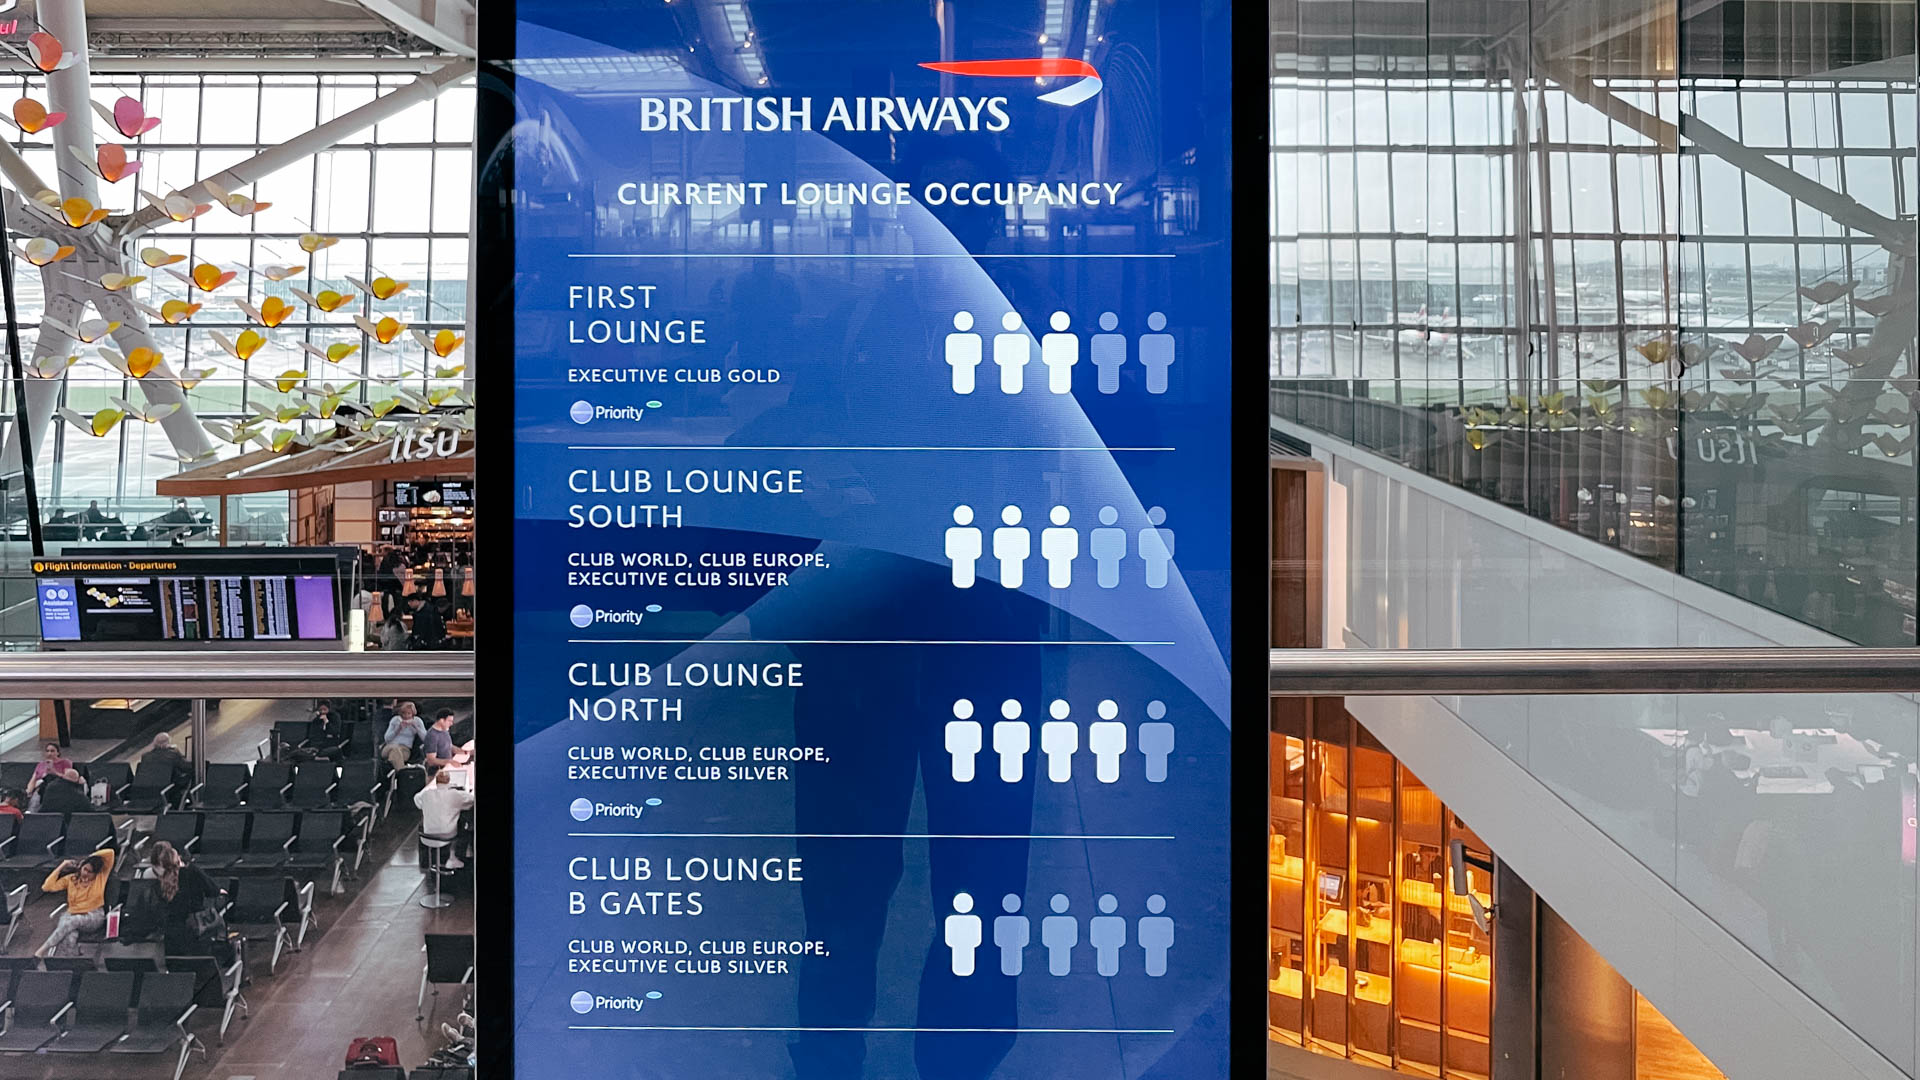 British Airways Galleries First Lounge capacity screen